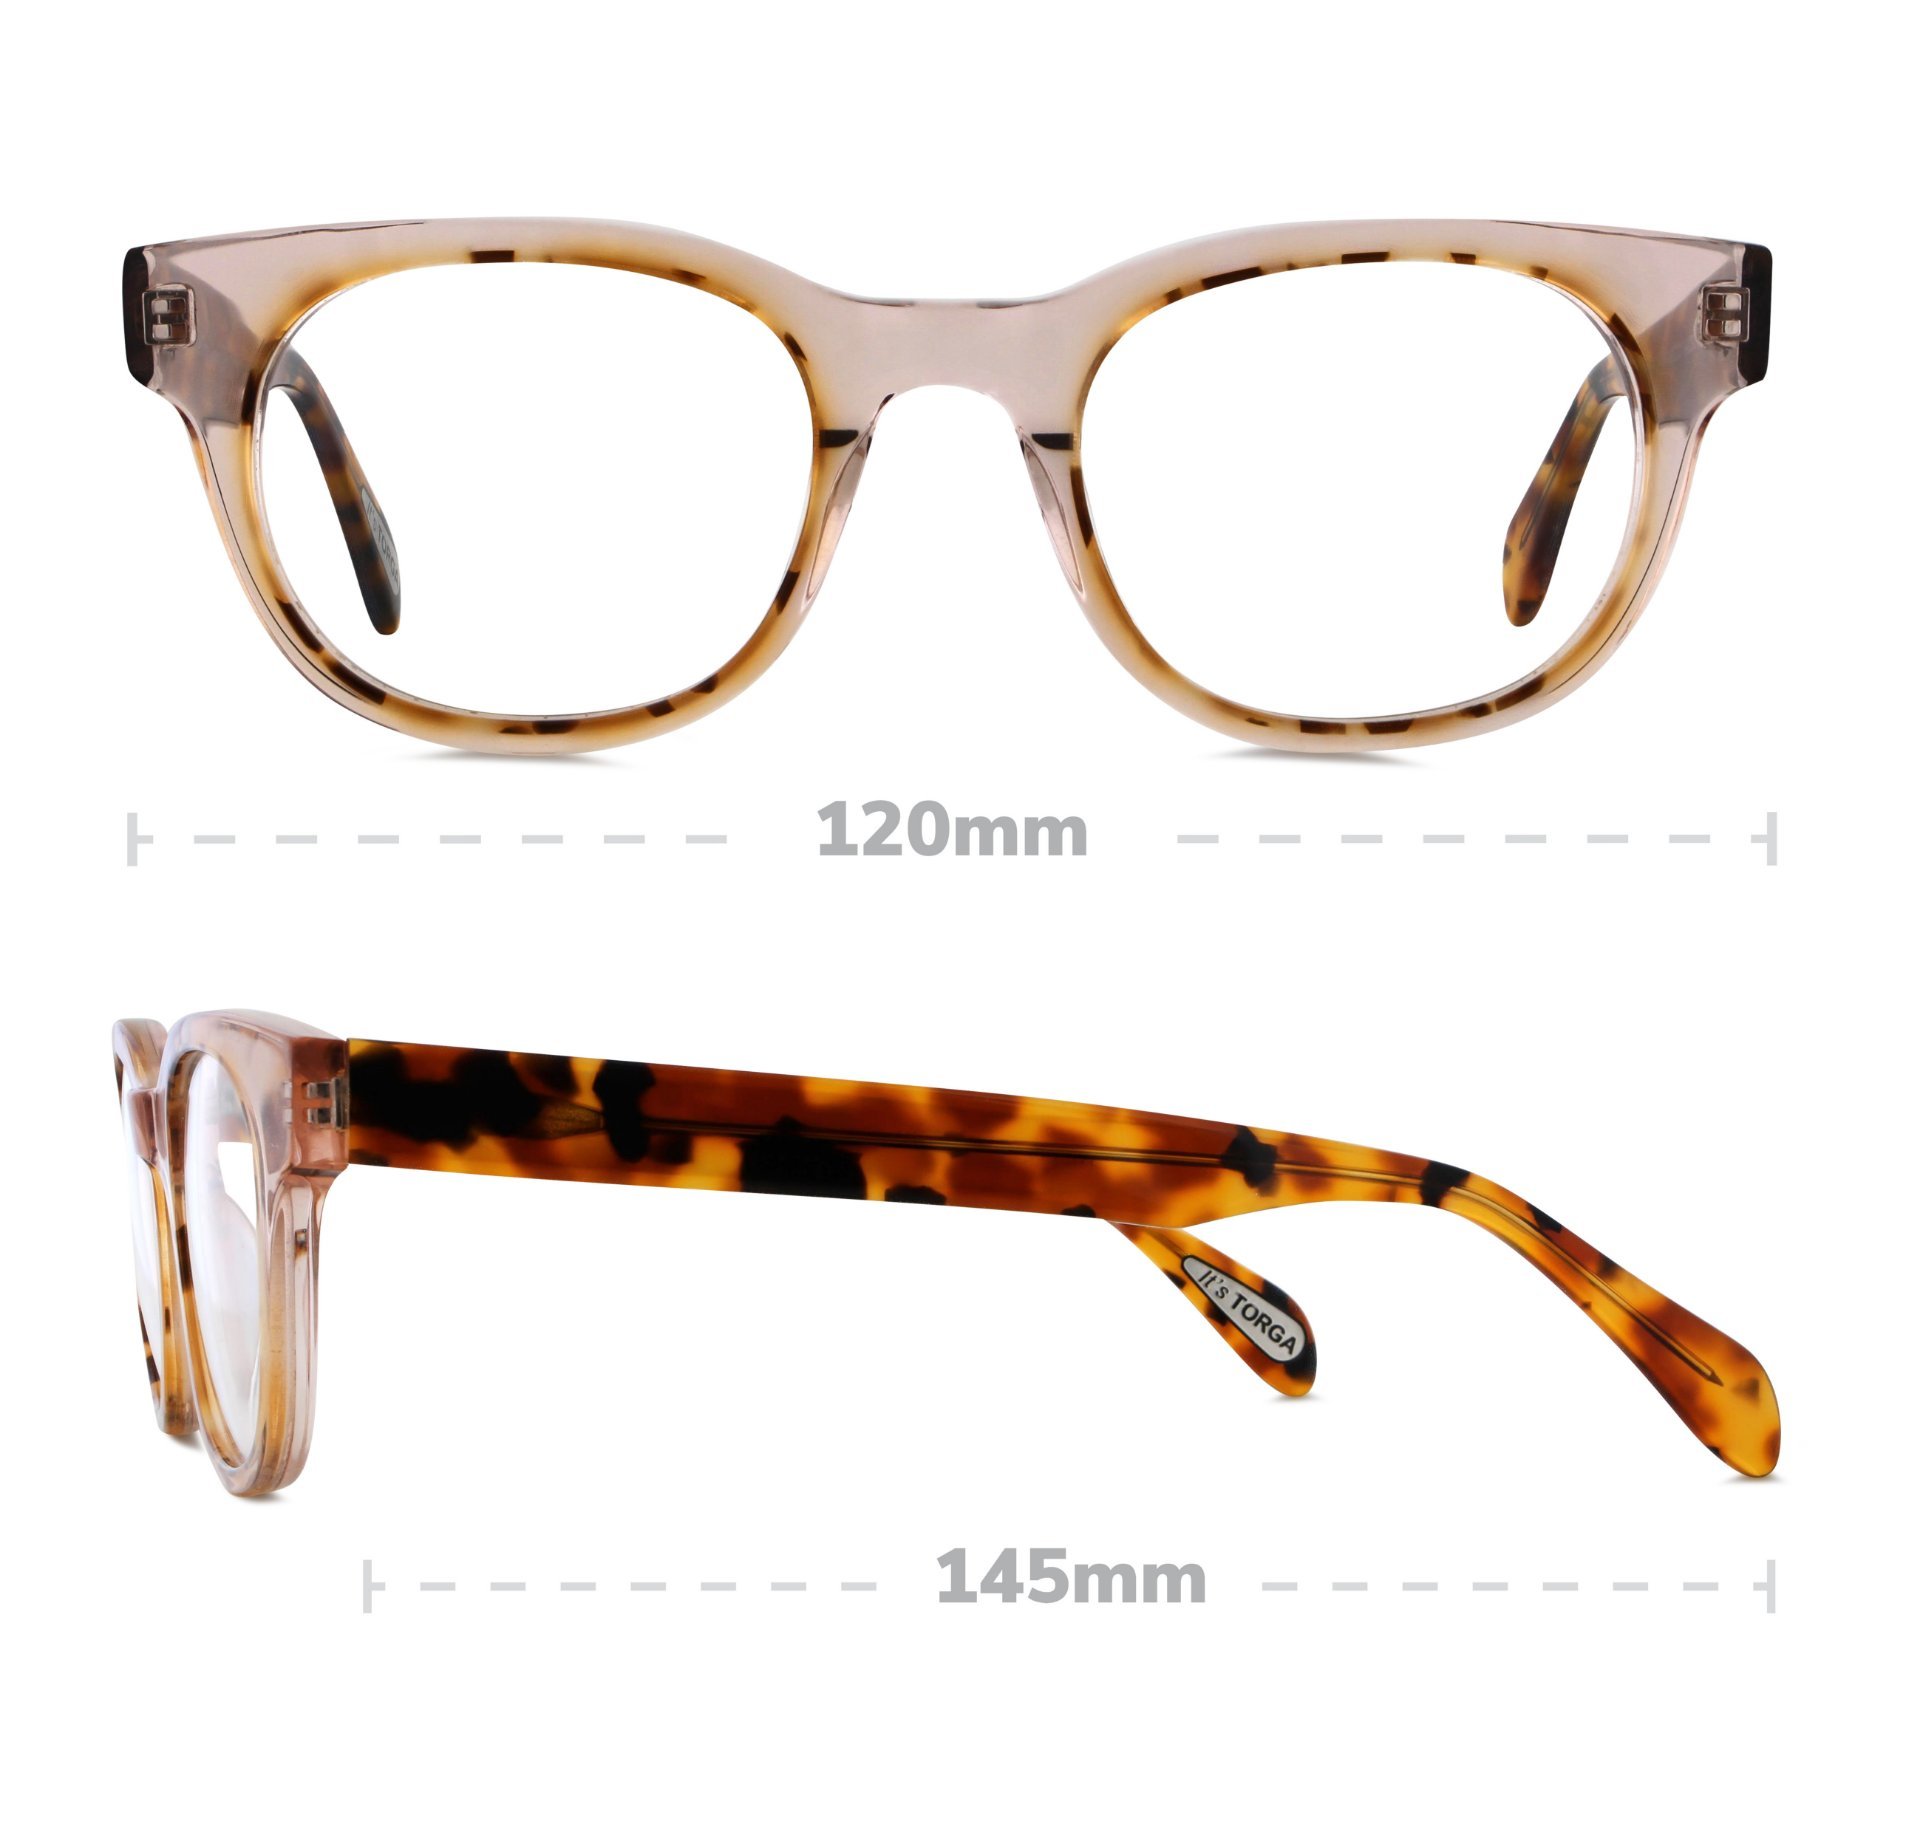 Shop Torga Prescription Eyewear - Glasses Online or In Store